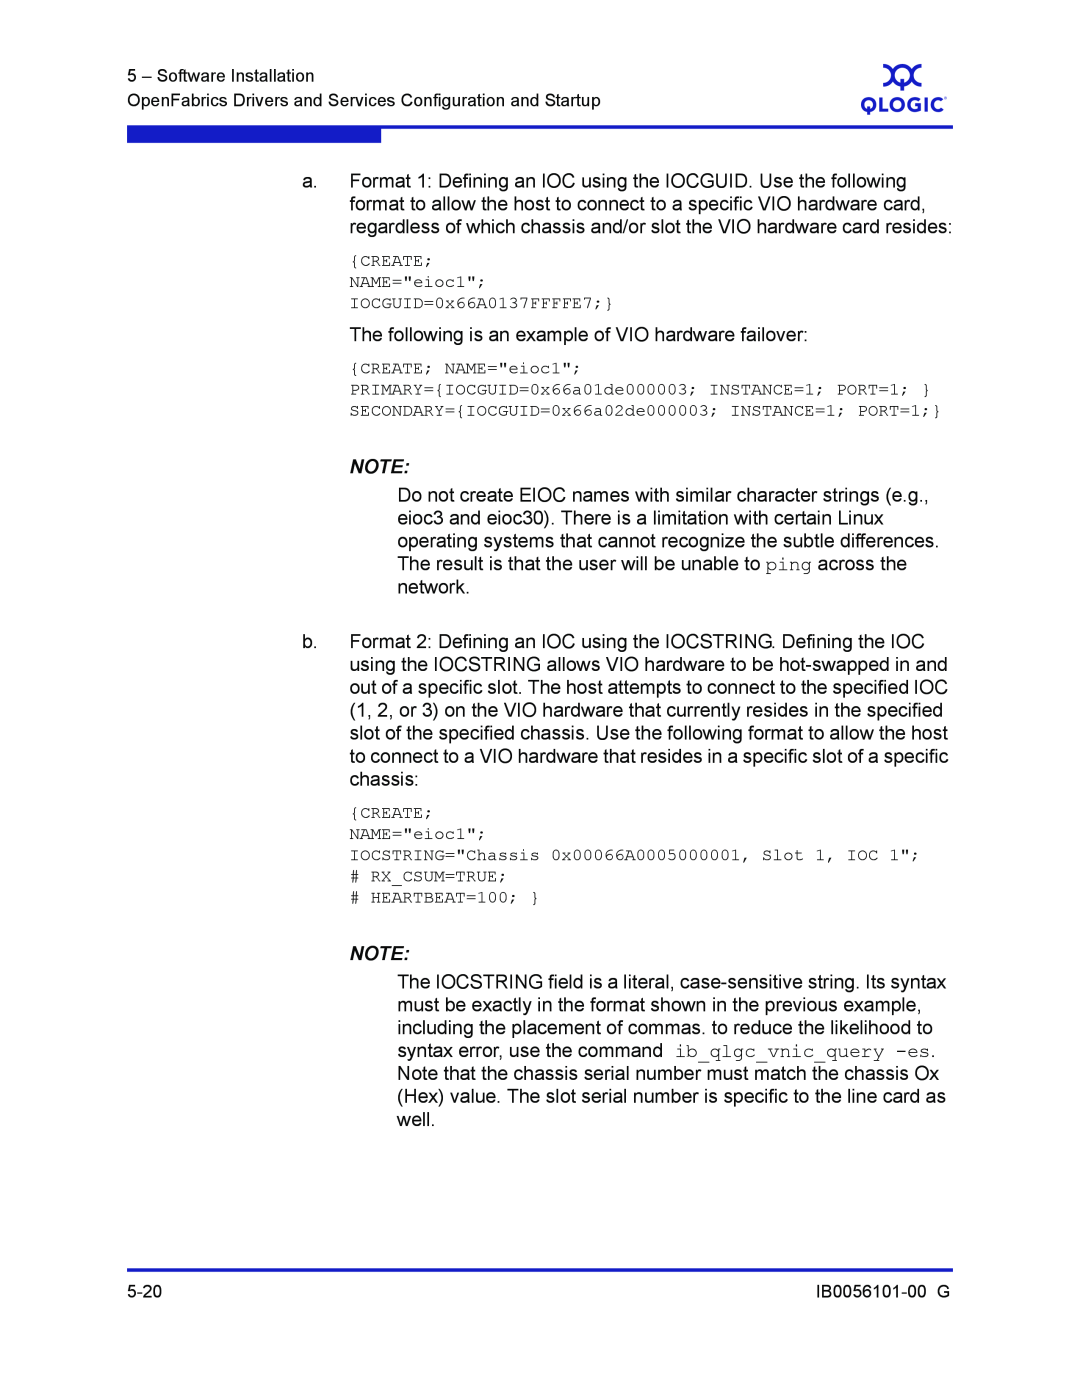 Q-Logic IB0056101-00 G manual The following is an example of VIO hardware failover 